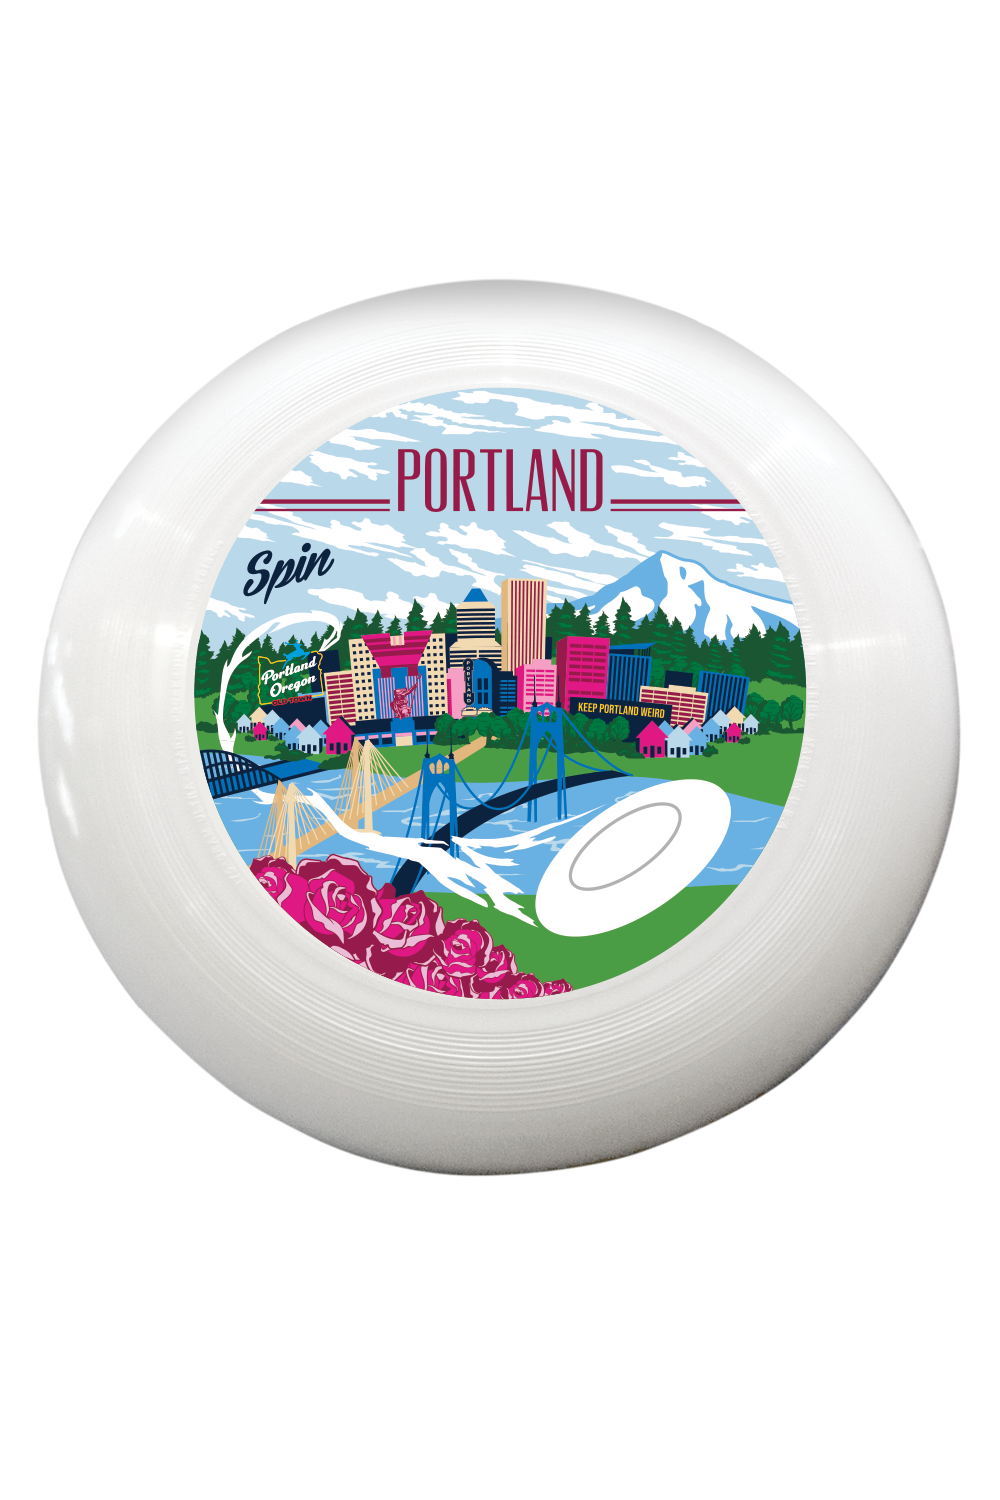 Portland Disc